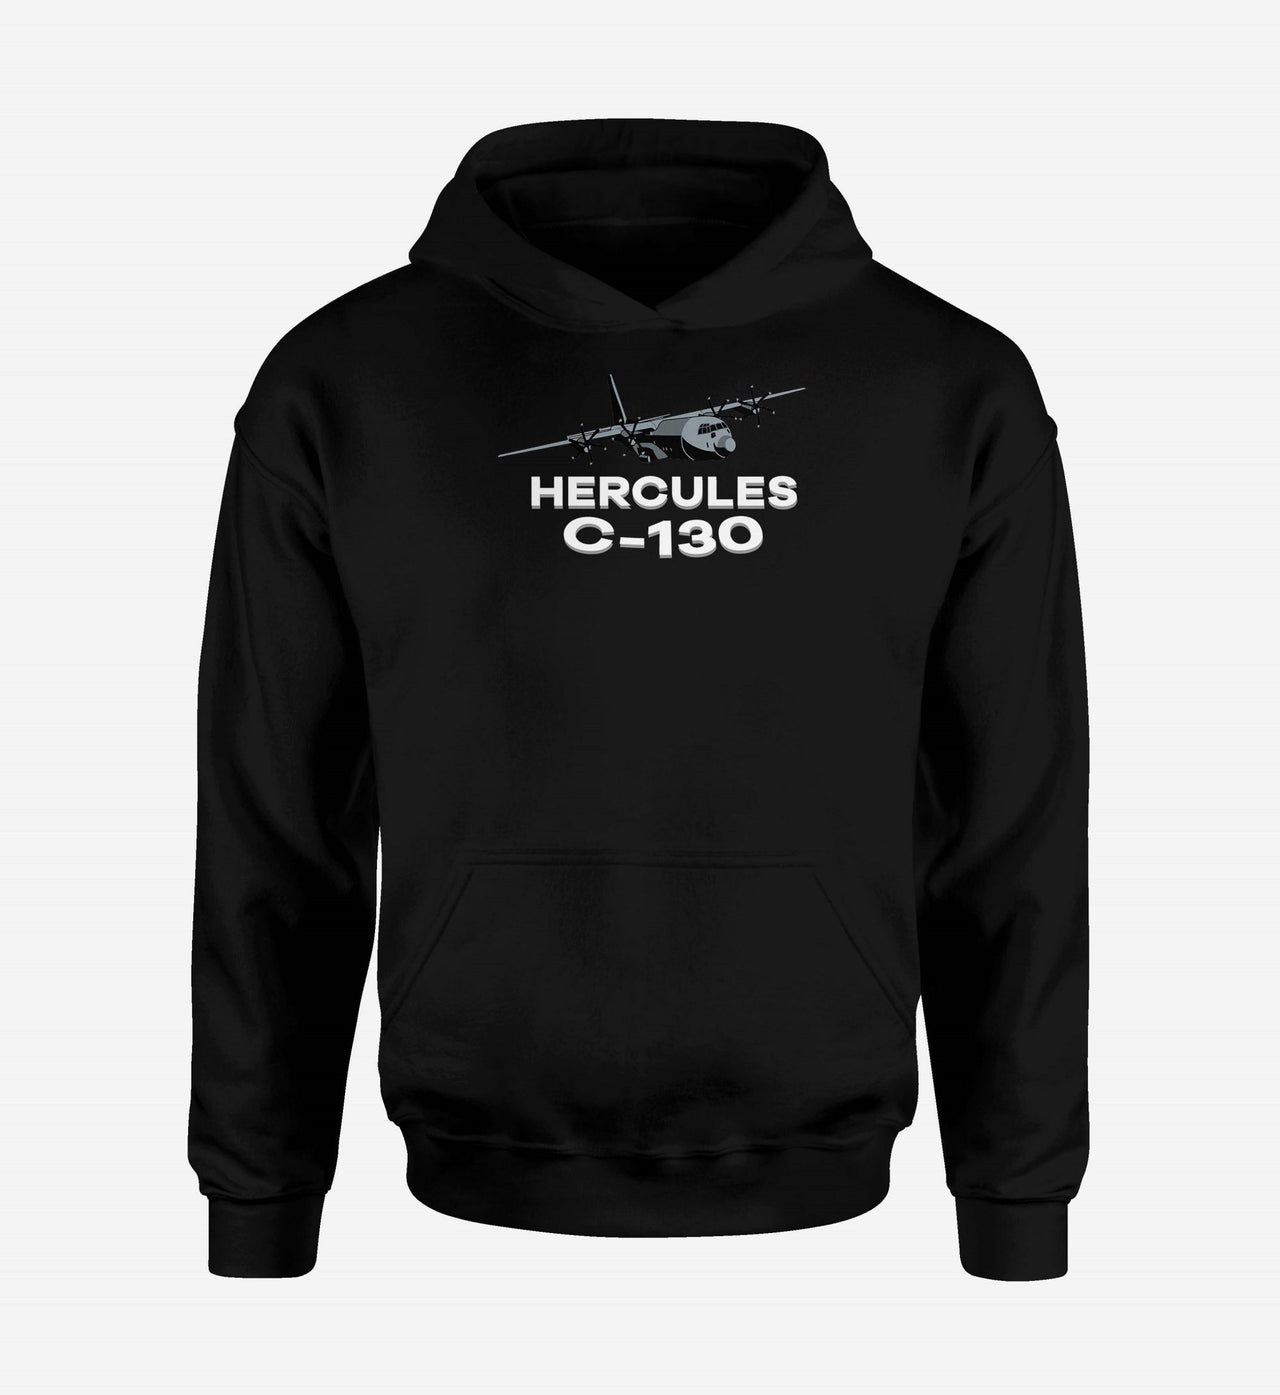 The Hercules C130 Designed Hoodies